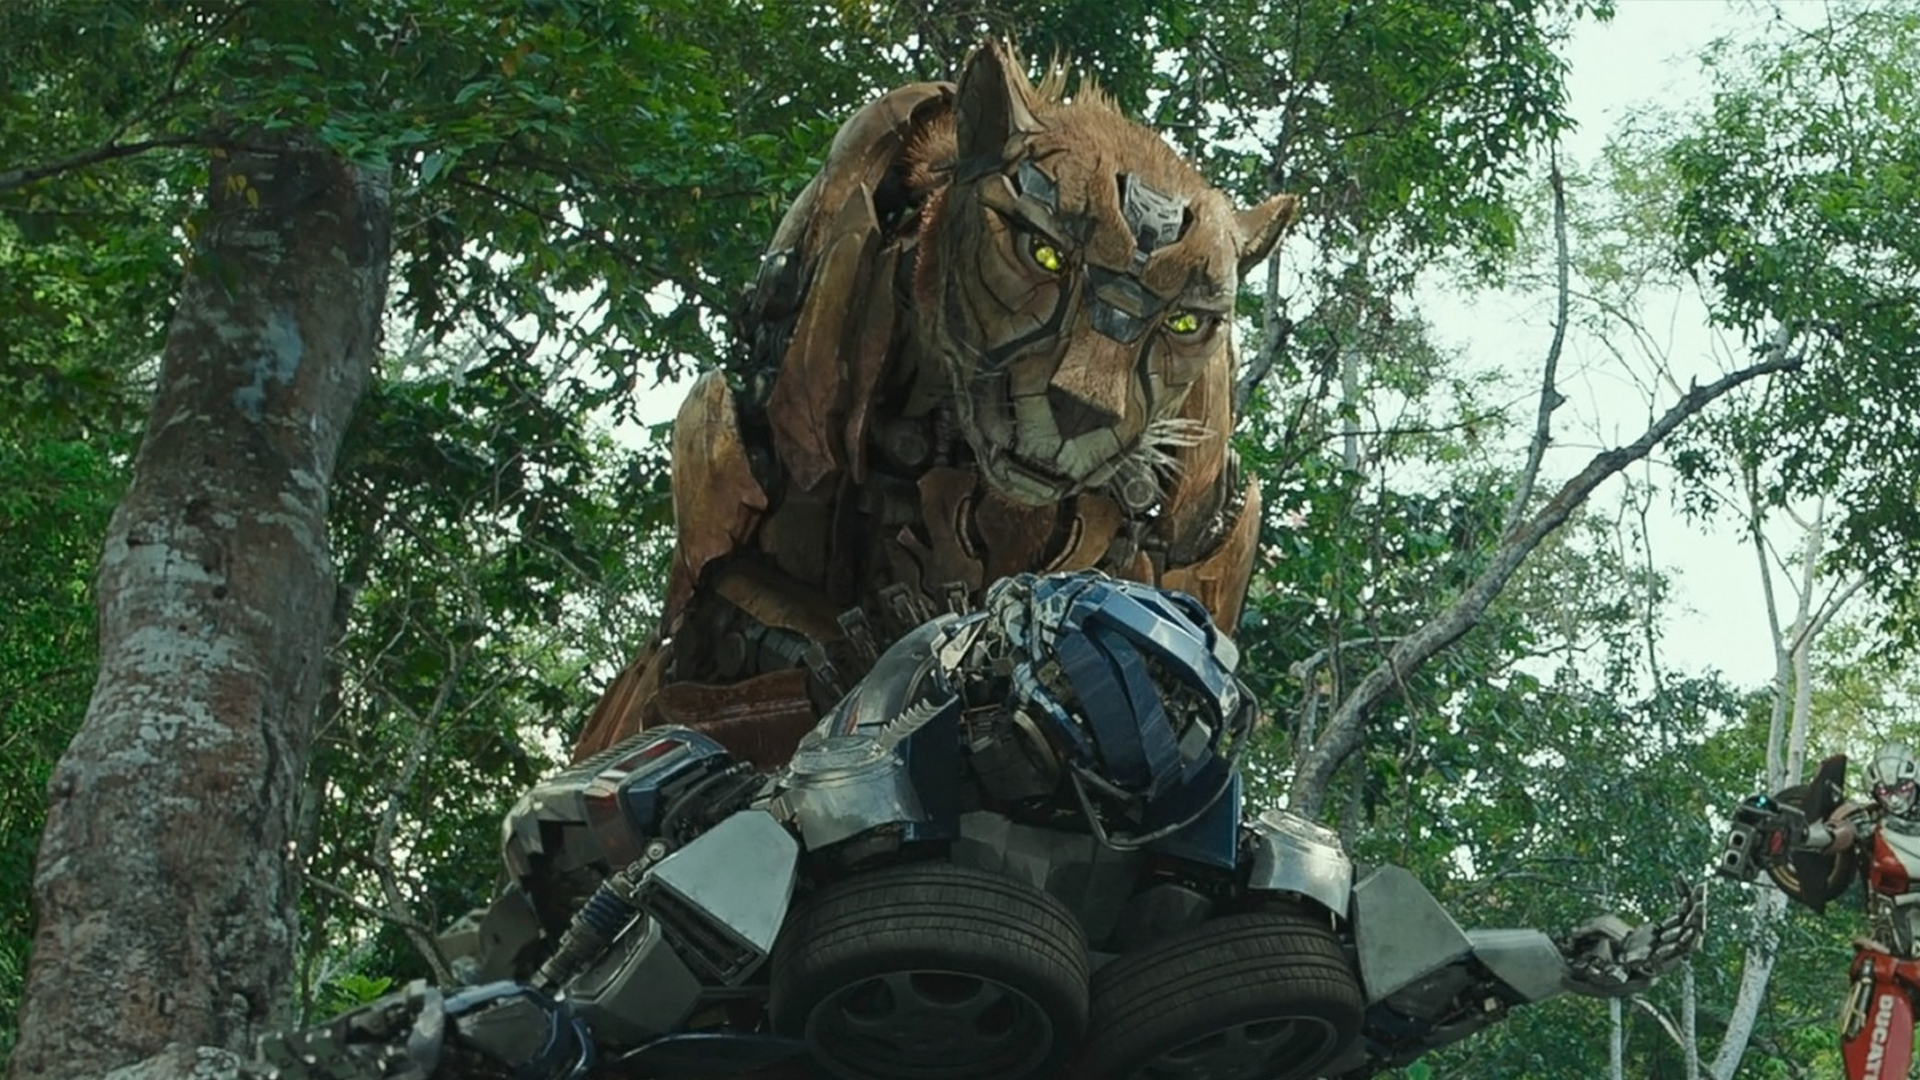 Transformers: Rise of the Beasts (2023) - Trivia - IMDb